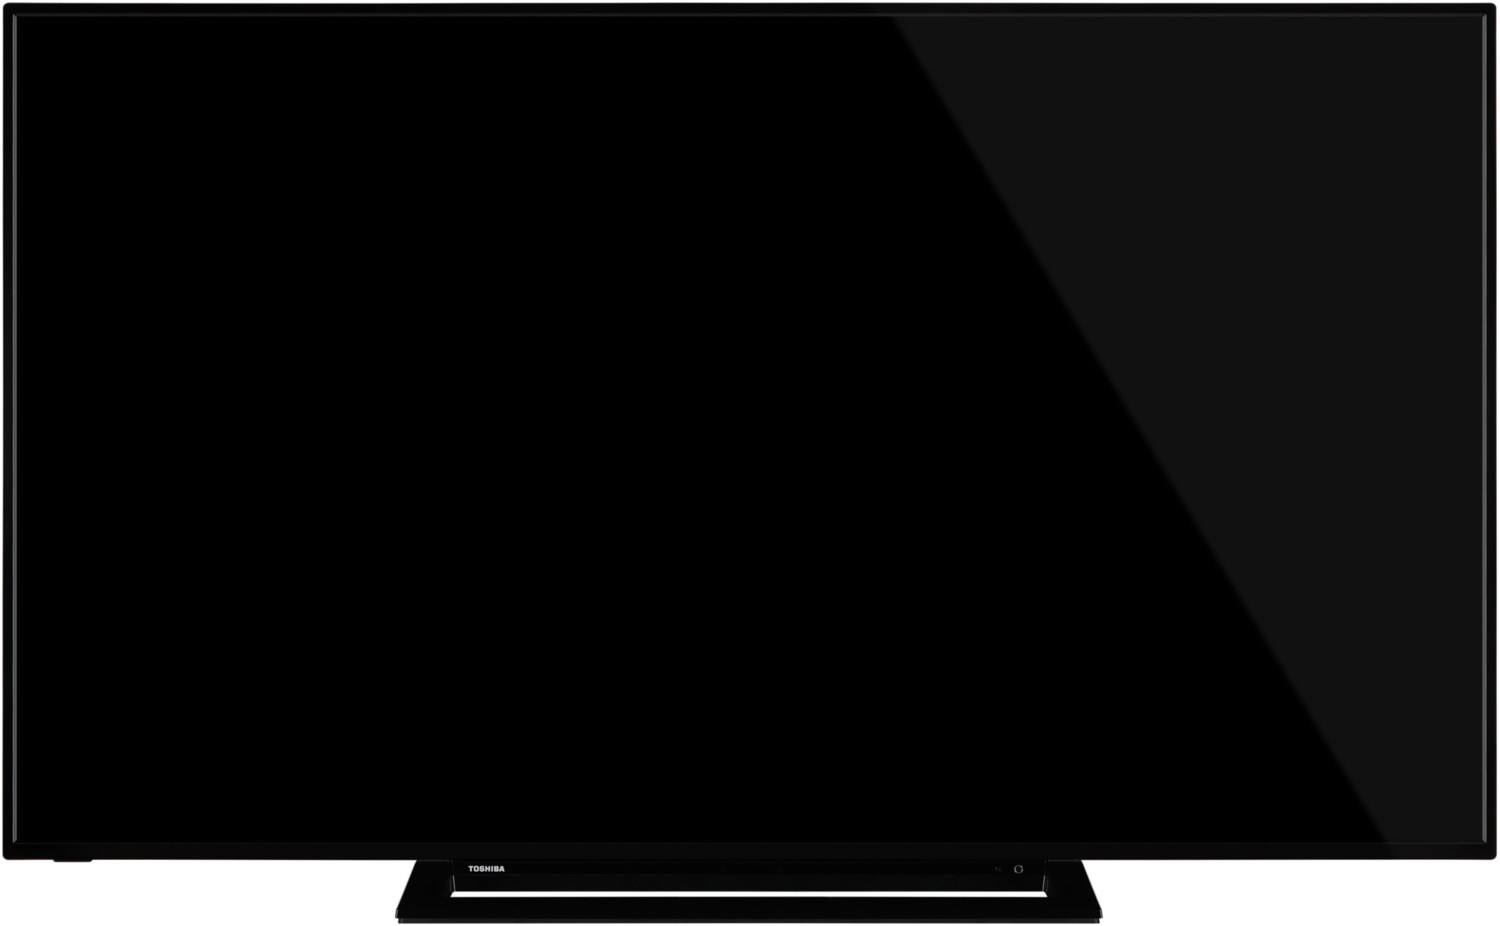 65UK3163DG 164 cm (65) LCD-TV mit LED-Technik schwarz / G